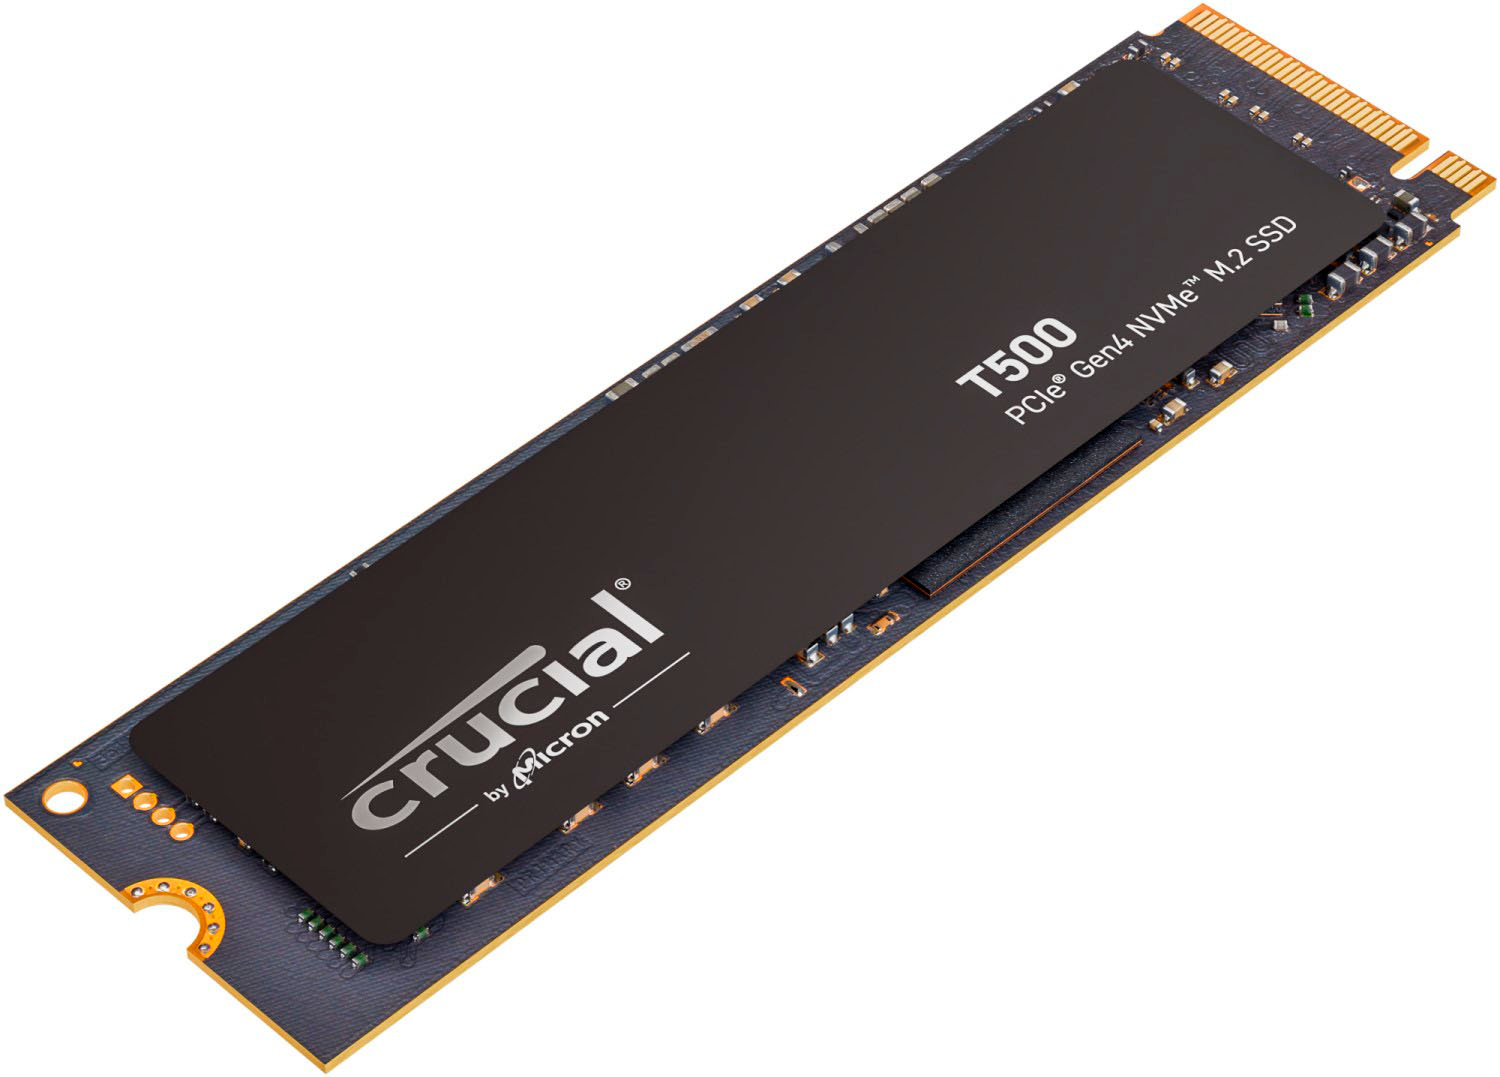 Crucial T500 1TB PCIe Gen4 NVMe M.2 SSD, CT1000T500SSD8